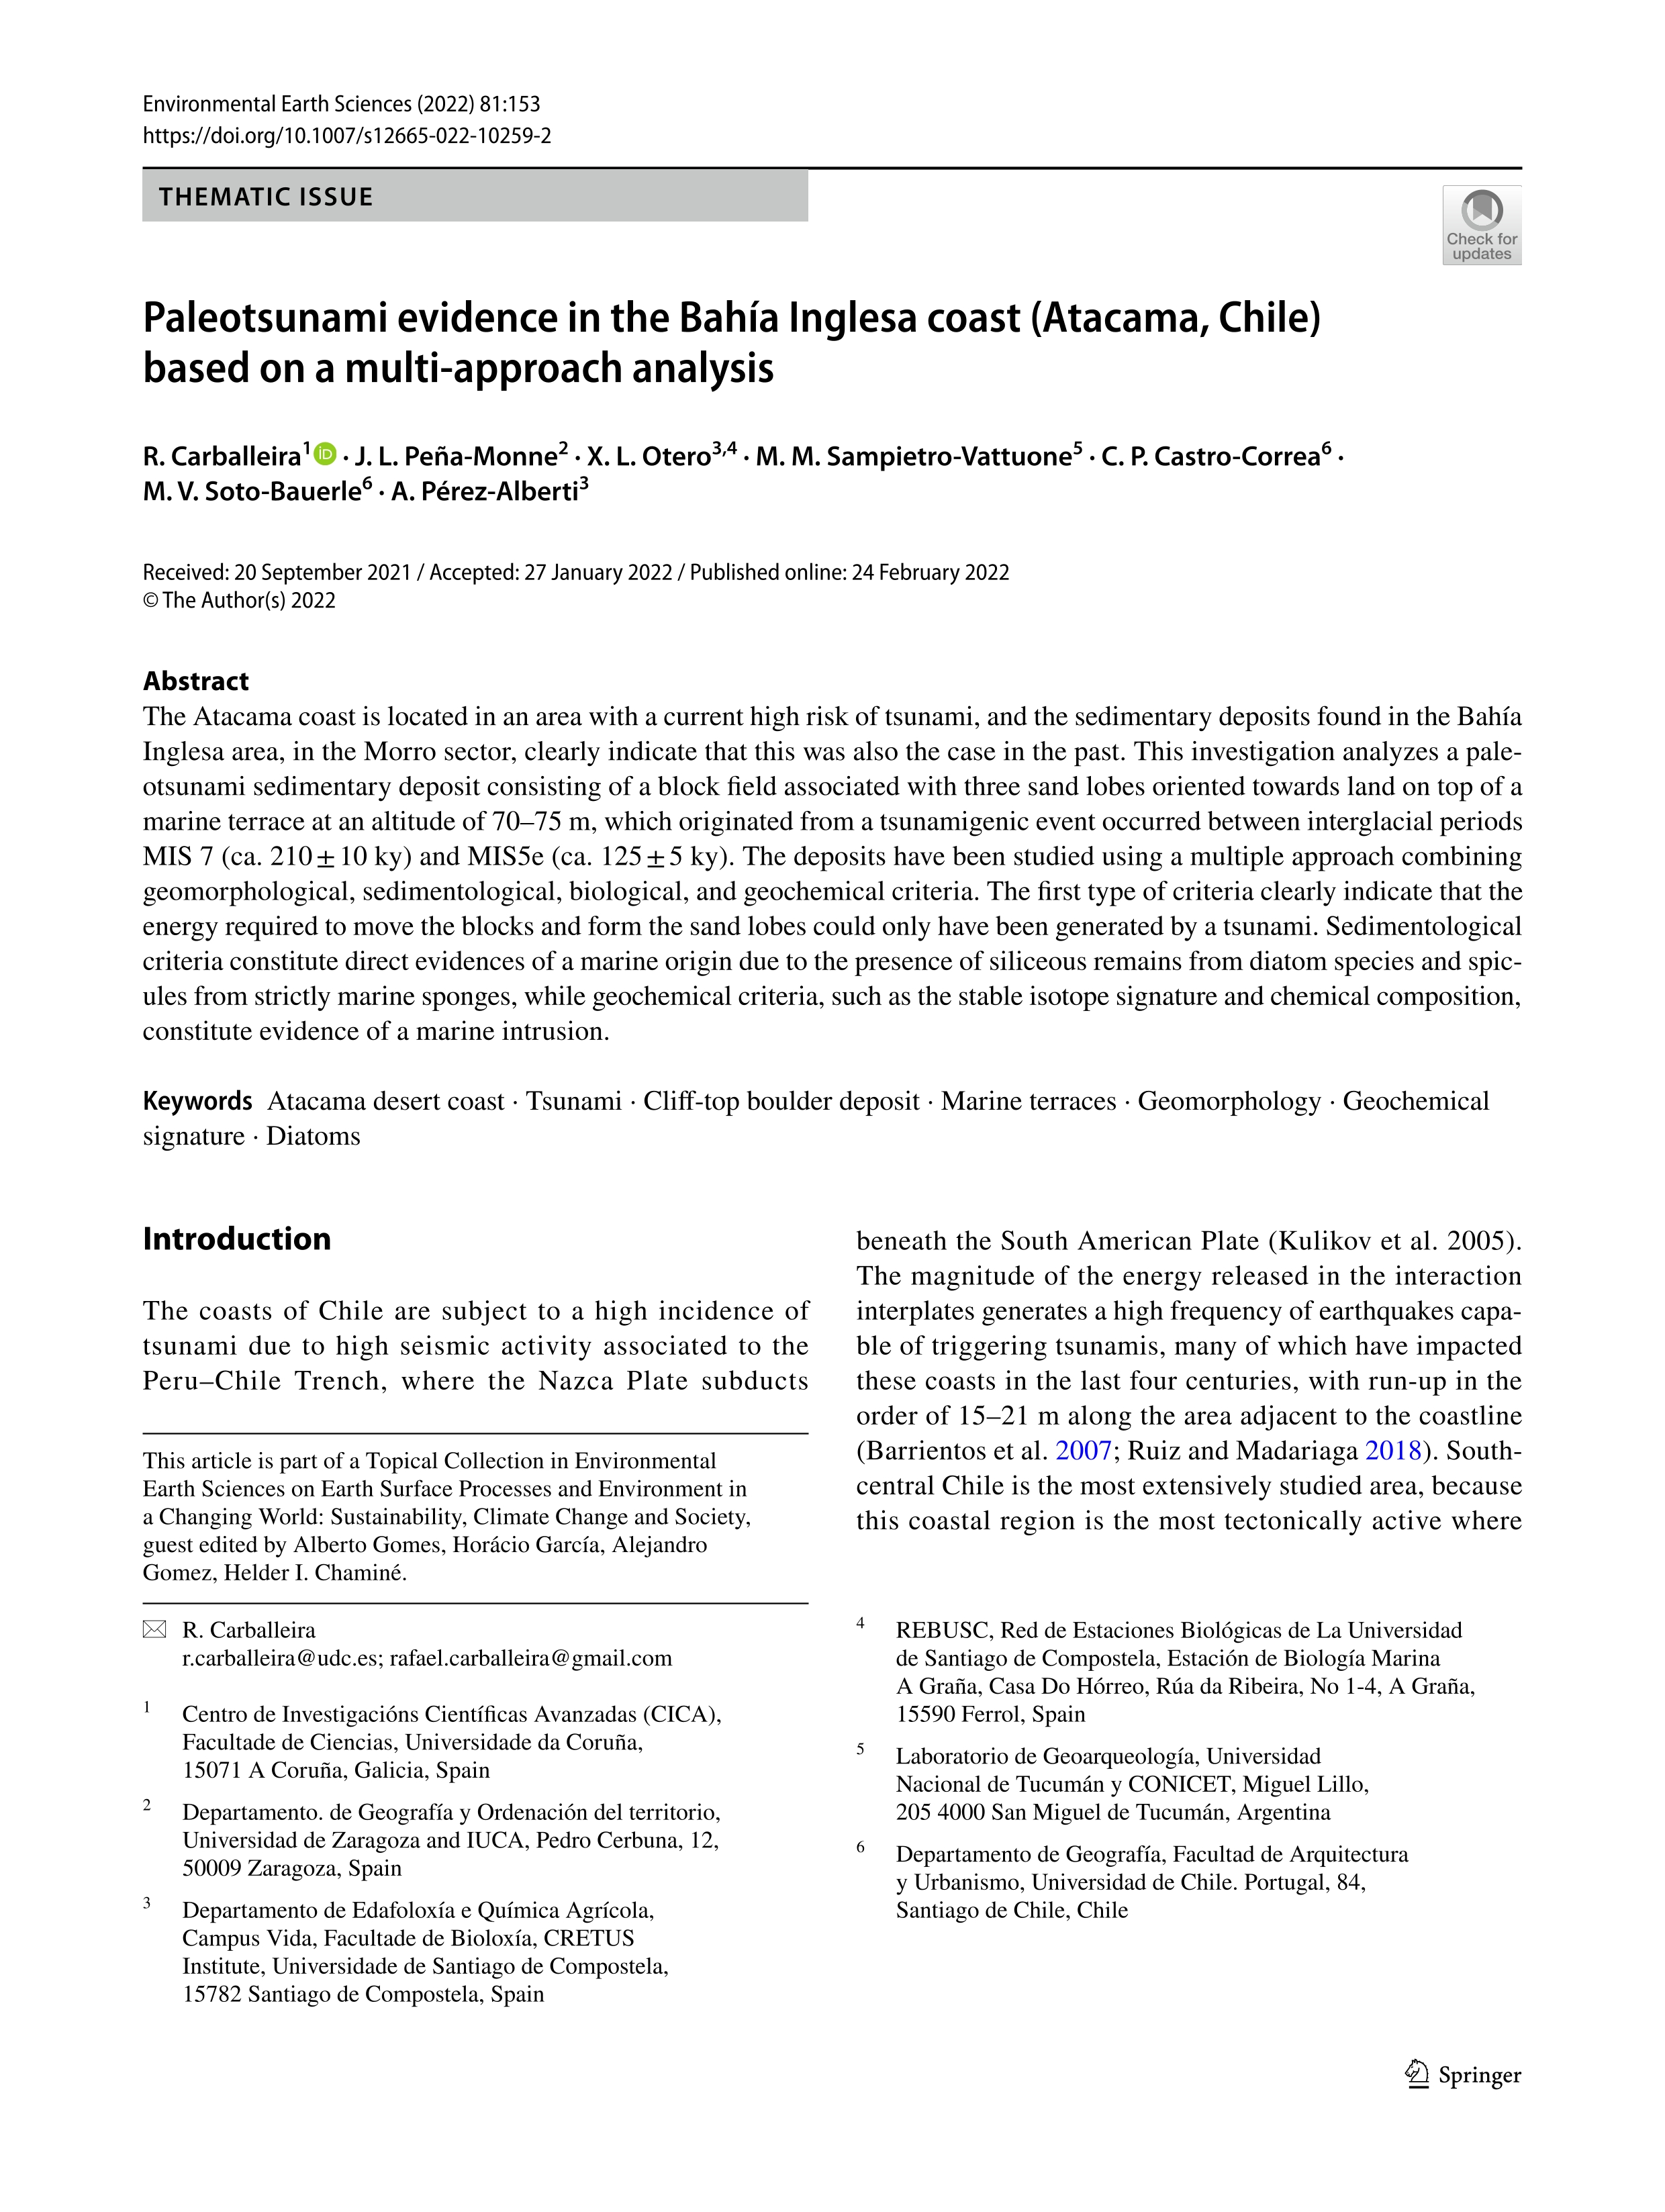 Paleotsunami evidence in the Bahía Inglesa coast (Atacama, Chile) based on a multi-approach analysis